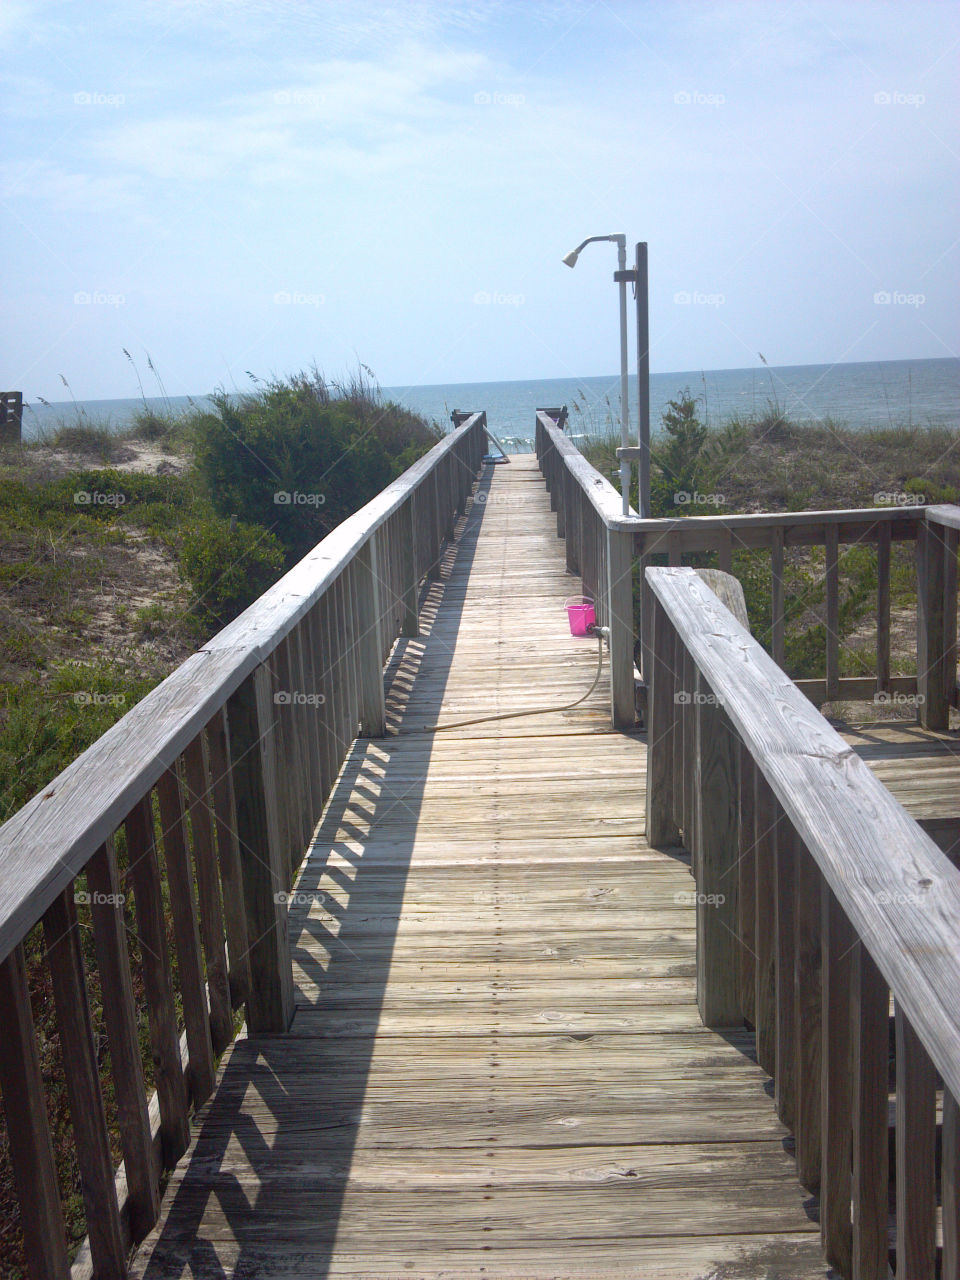 A boardwalk to the Atlantic Ocean in Emerald Isle, North Carolina.